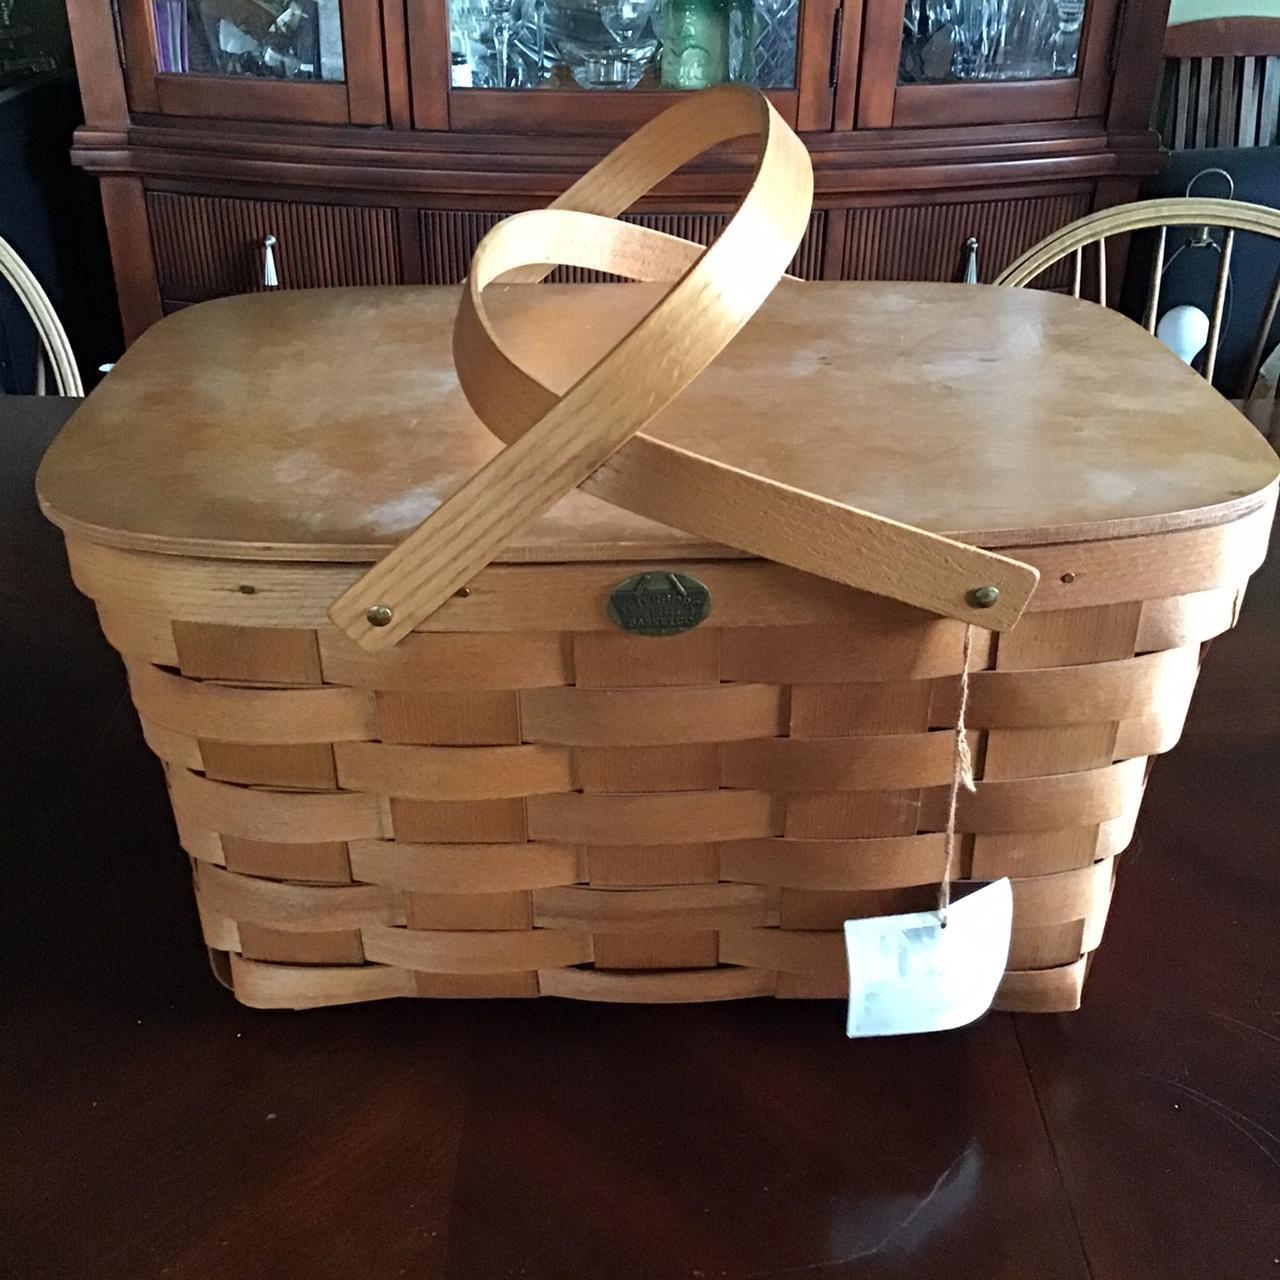 Peterboro Wooden Basket With Handles & Hinged Lid - household